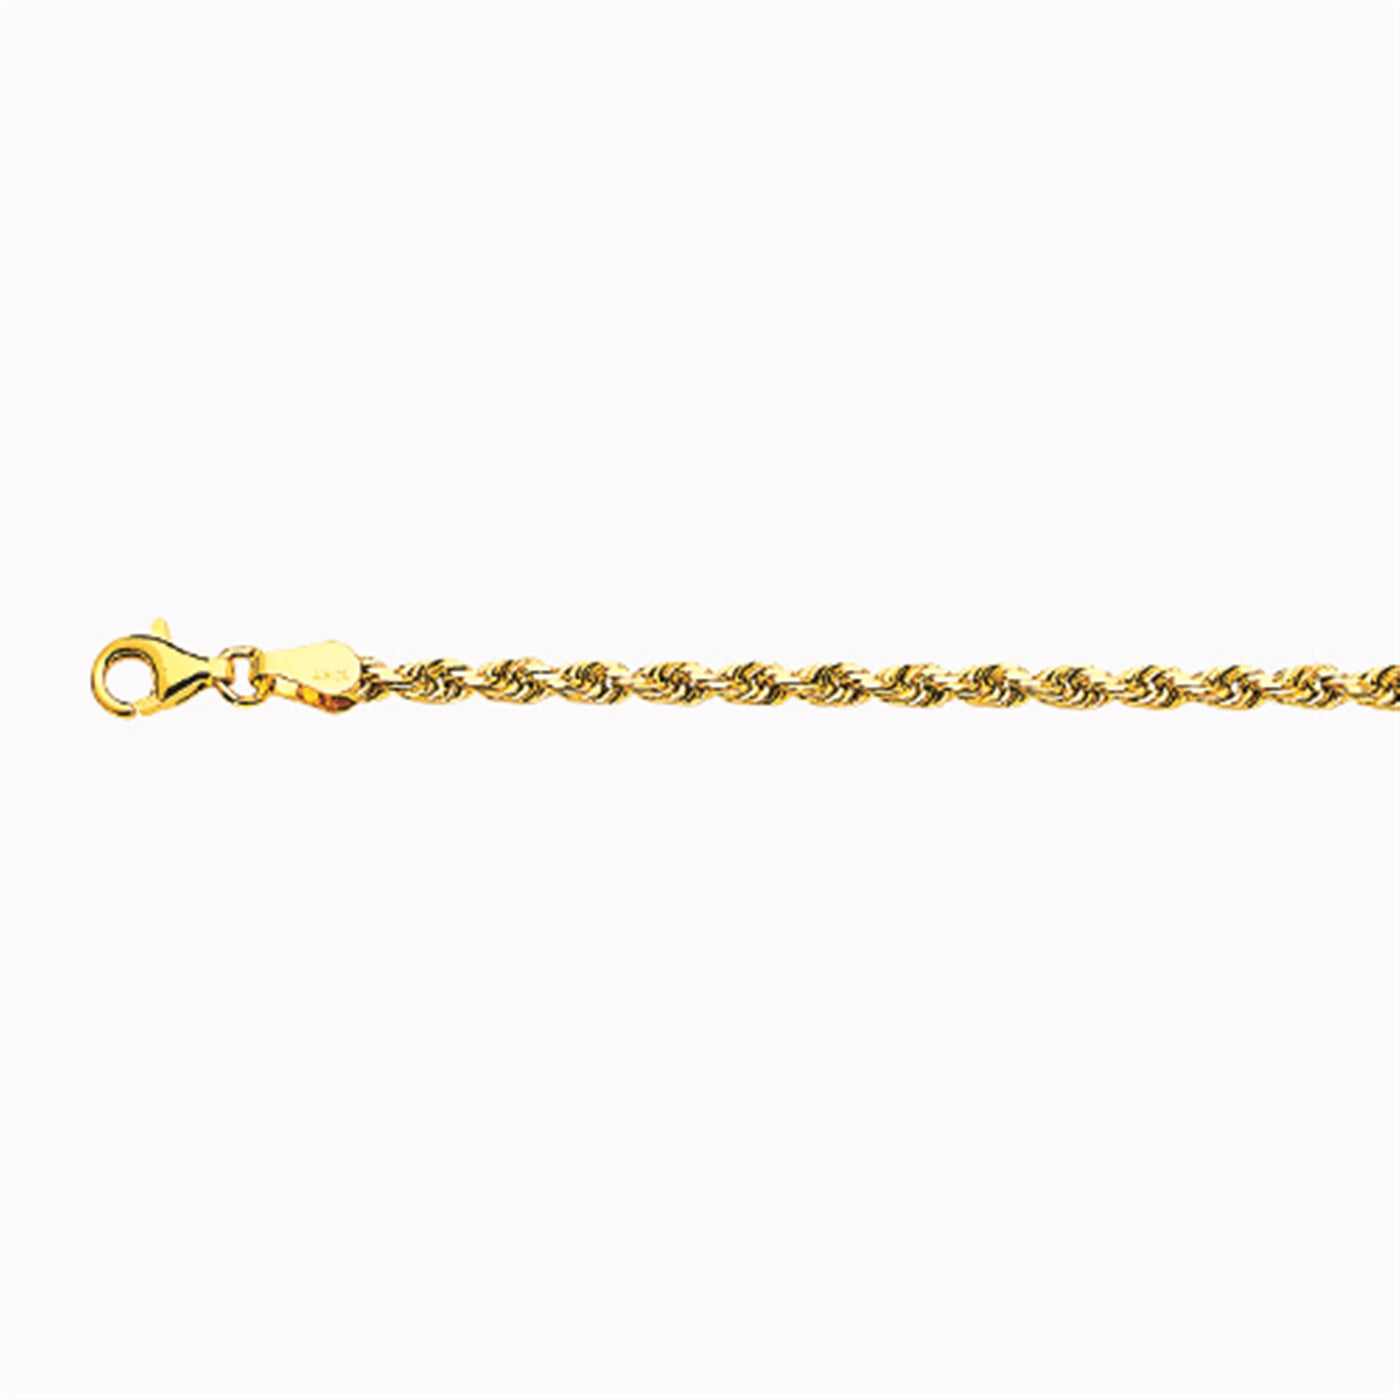 10K Yellow Gold 3mm 24" Rope Chain